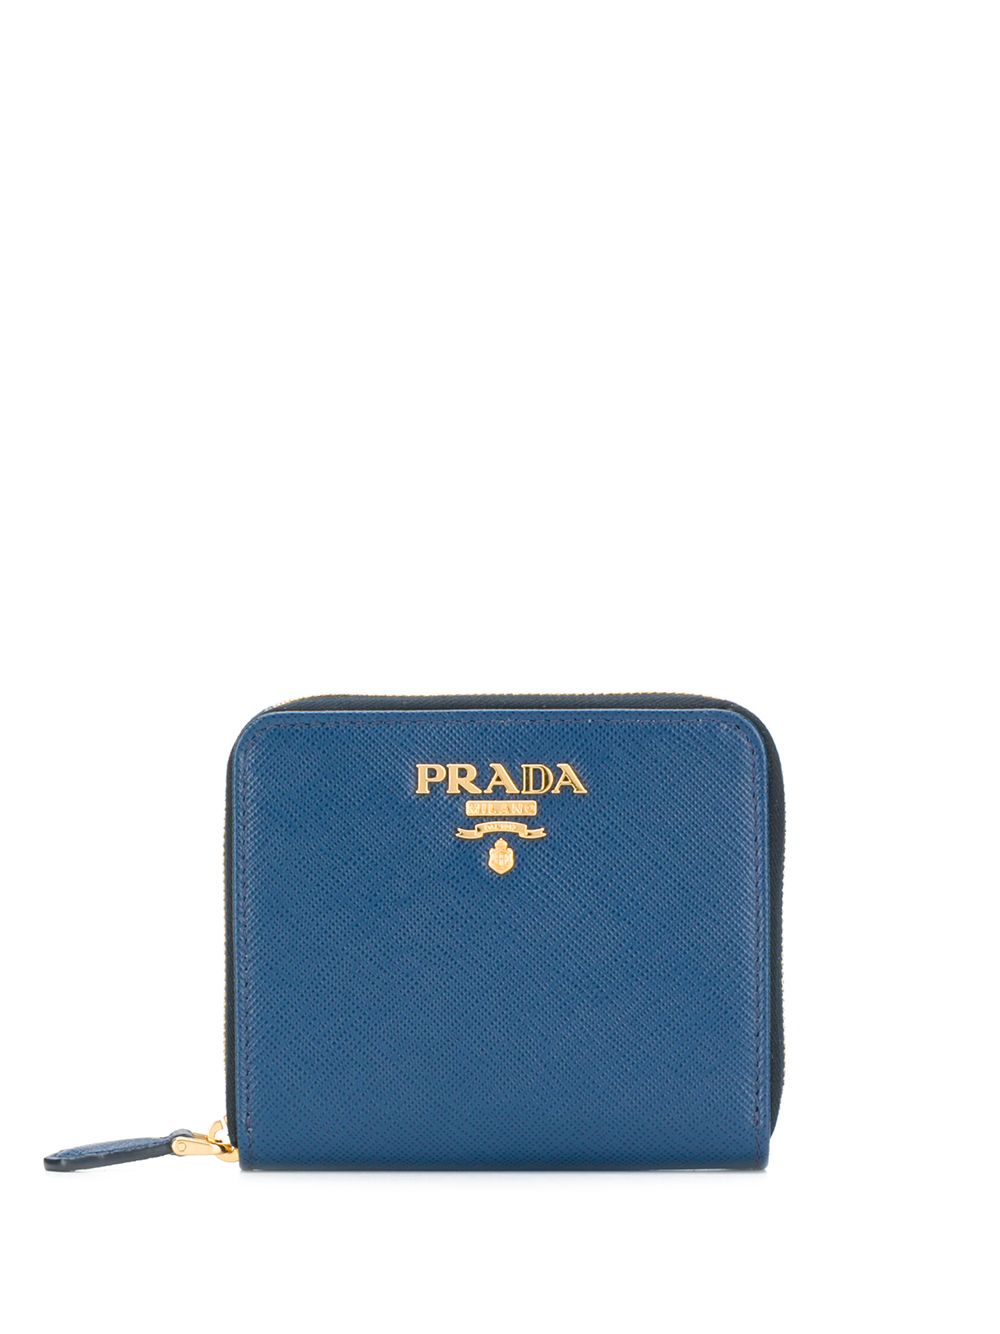 фото Prada кошелек на молнии с металлическим логотипом